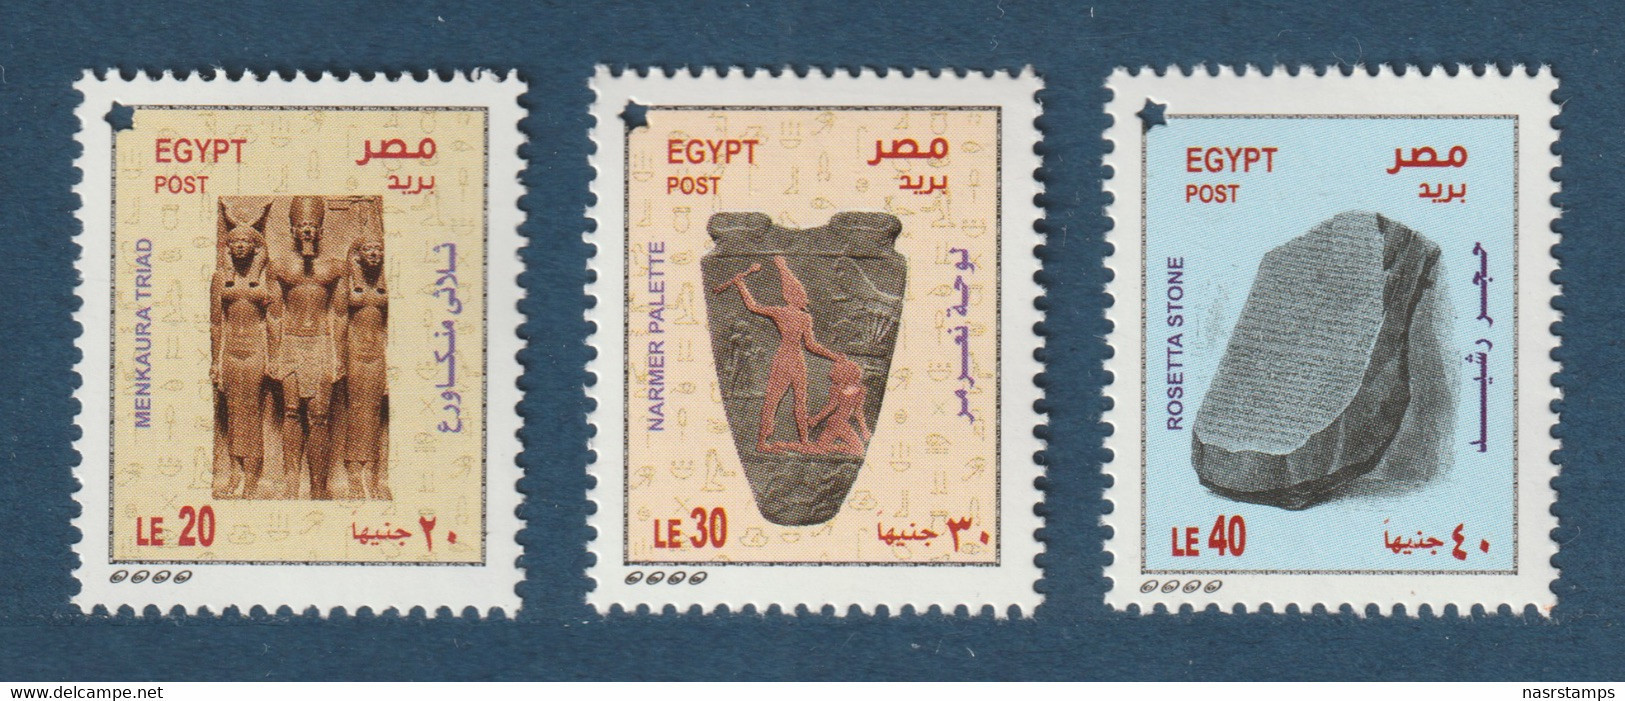 Egypt - 2022 - NEW - Definitive - Menkaura Triad - Narmer Palette - Rosetta Stone - MNH** - Ongebruikt